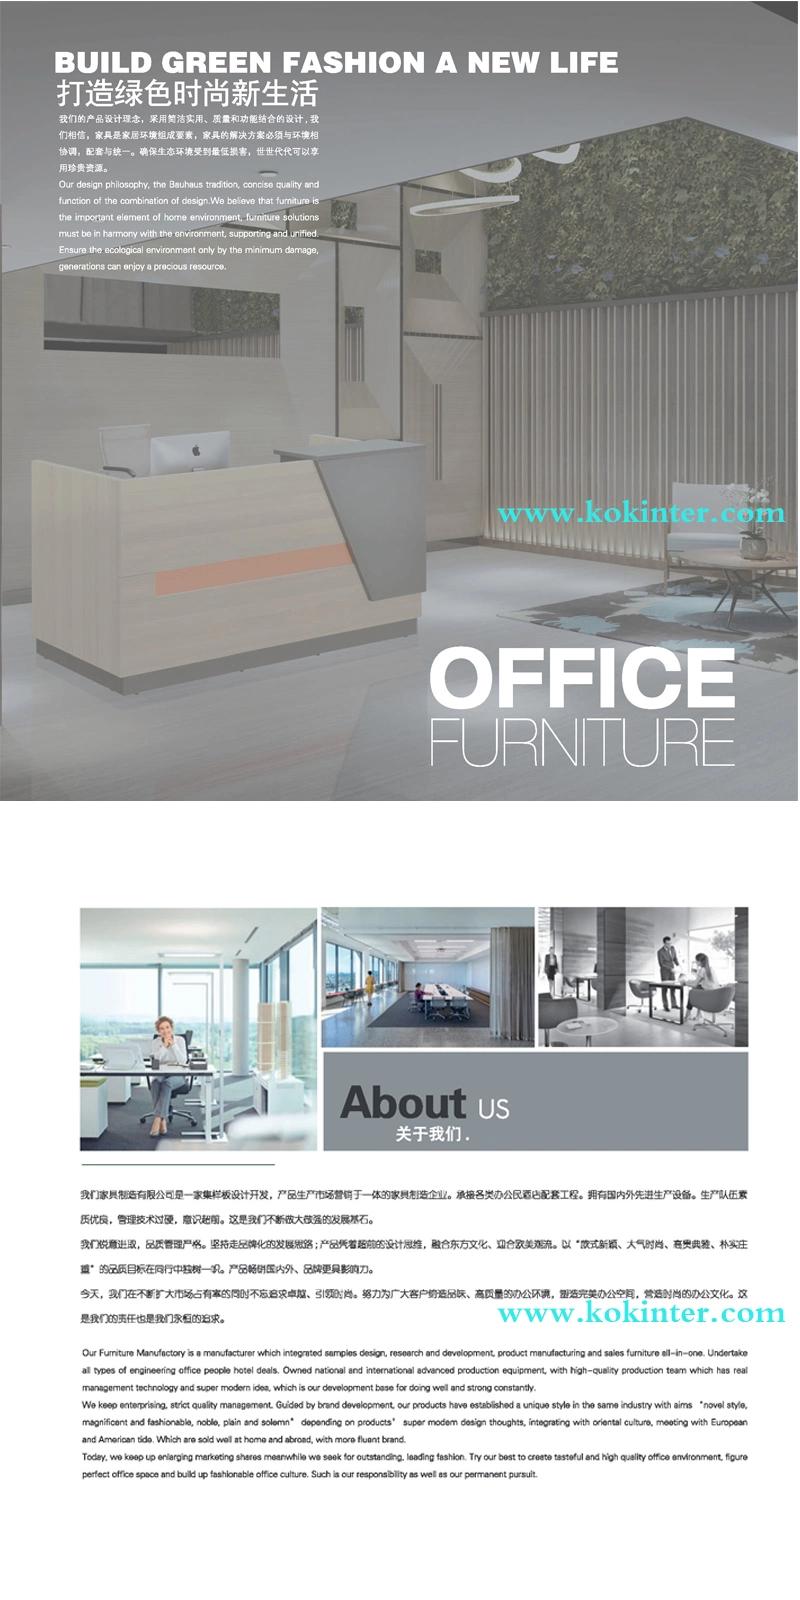 Modern Office Furniture Desk L Shaped Alice Series 10